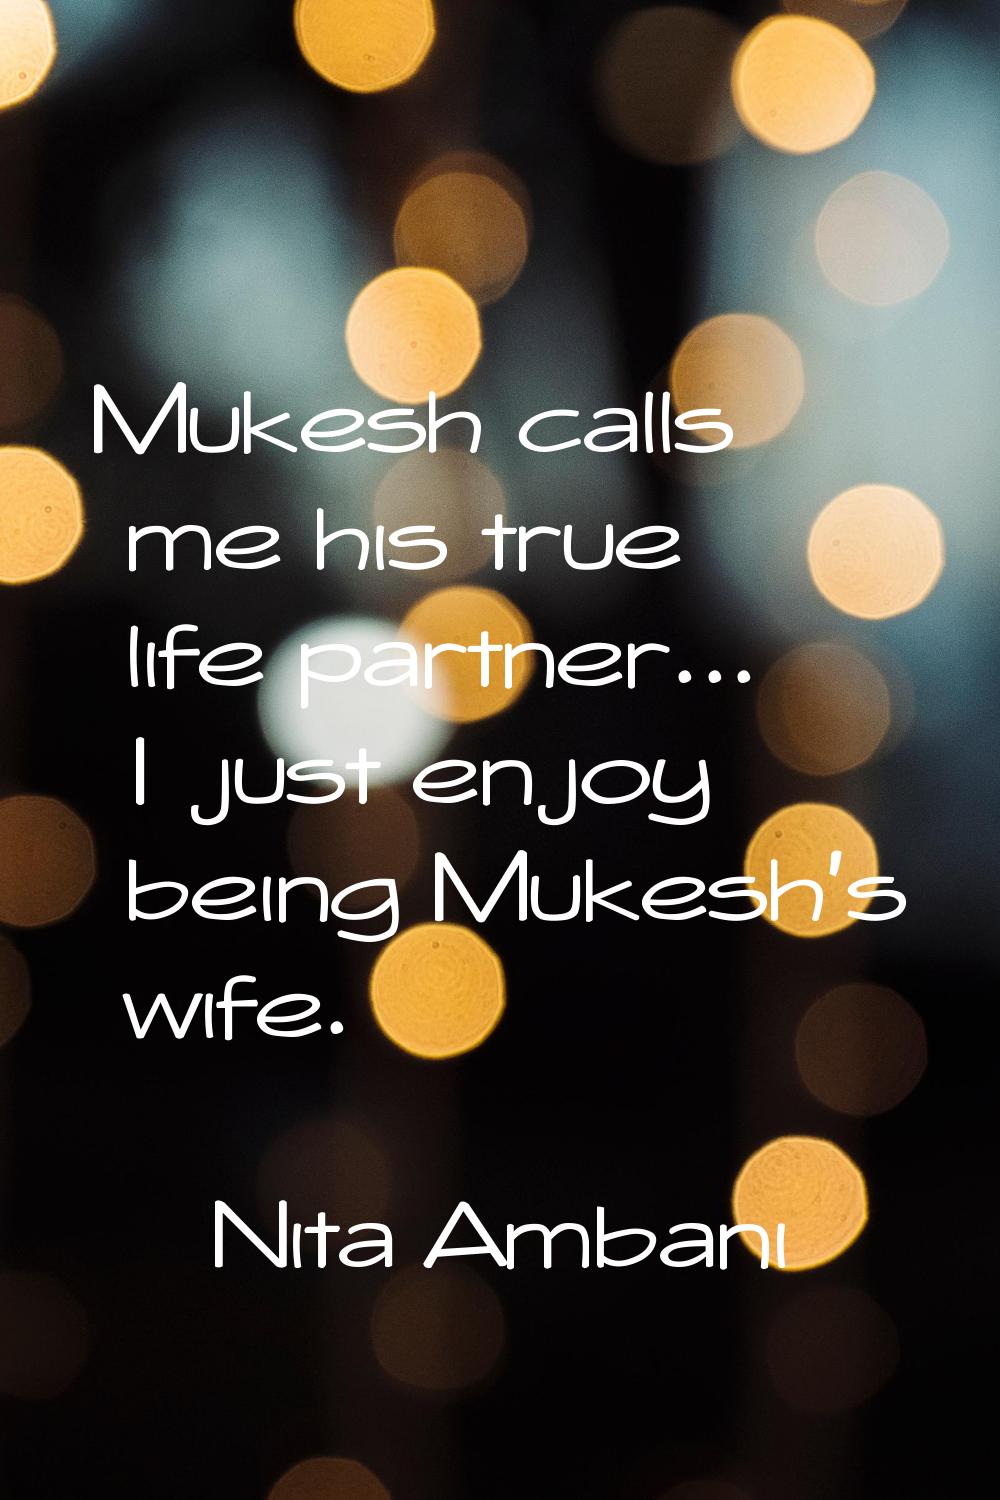 Mukesh calls me his true life partner... I just enjoy being Mukesh's wife.